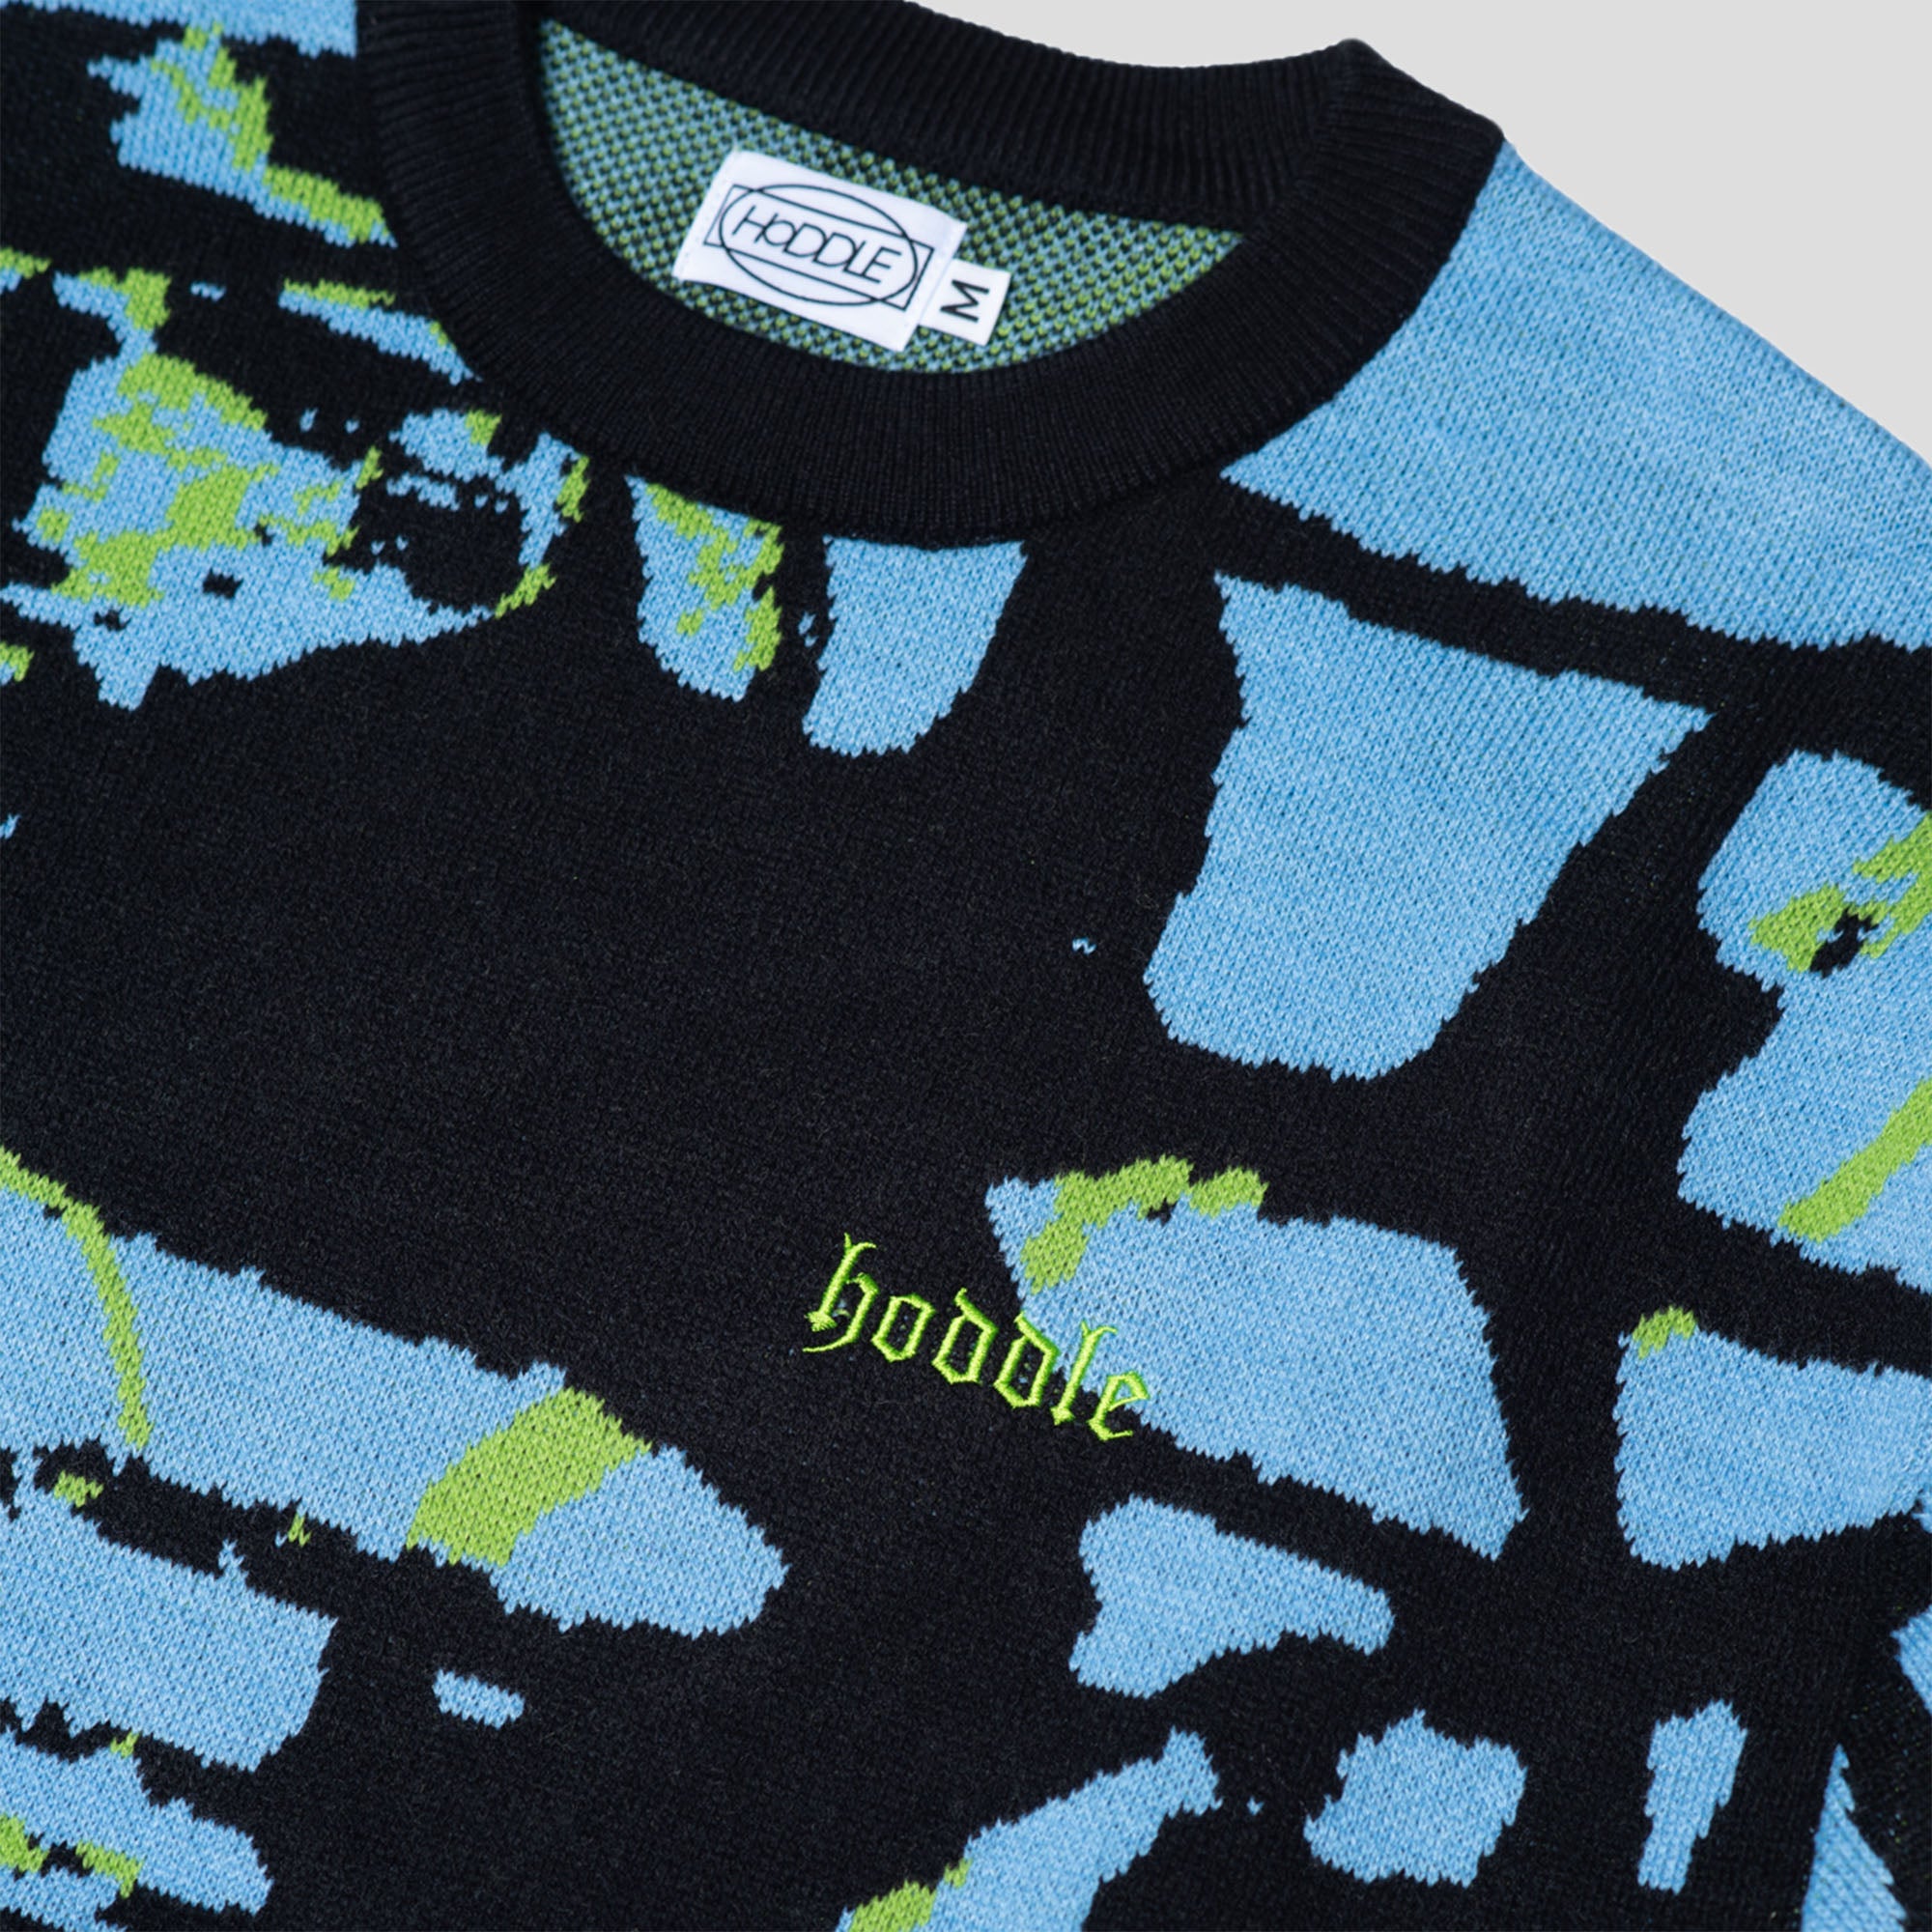 Hoddle Dungieon Knit - Blue / Black / Green